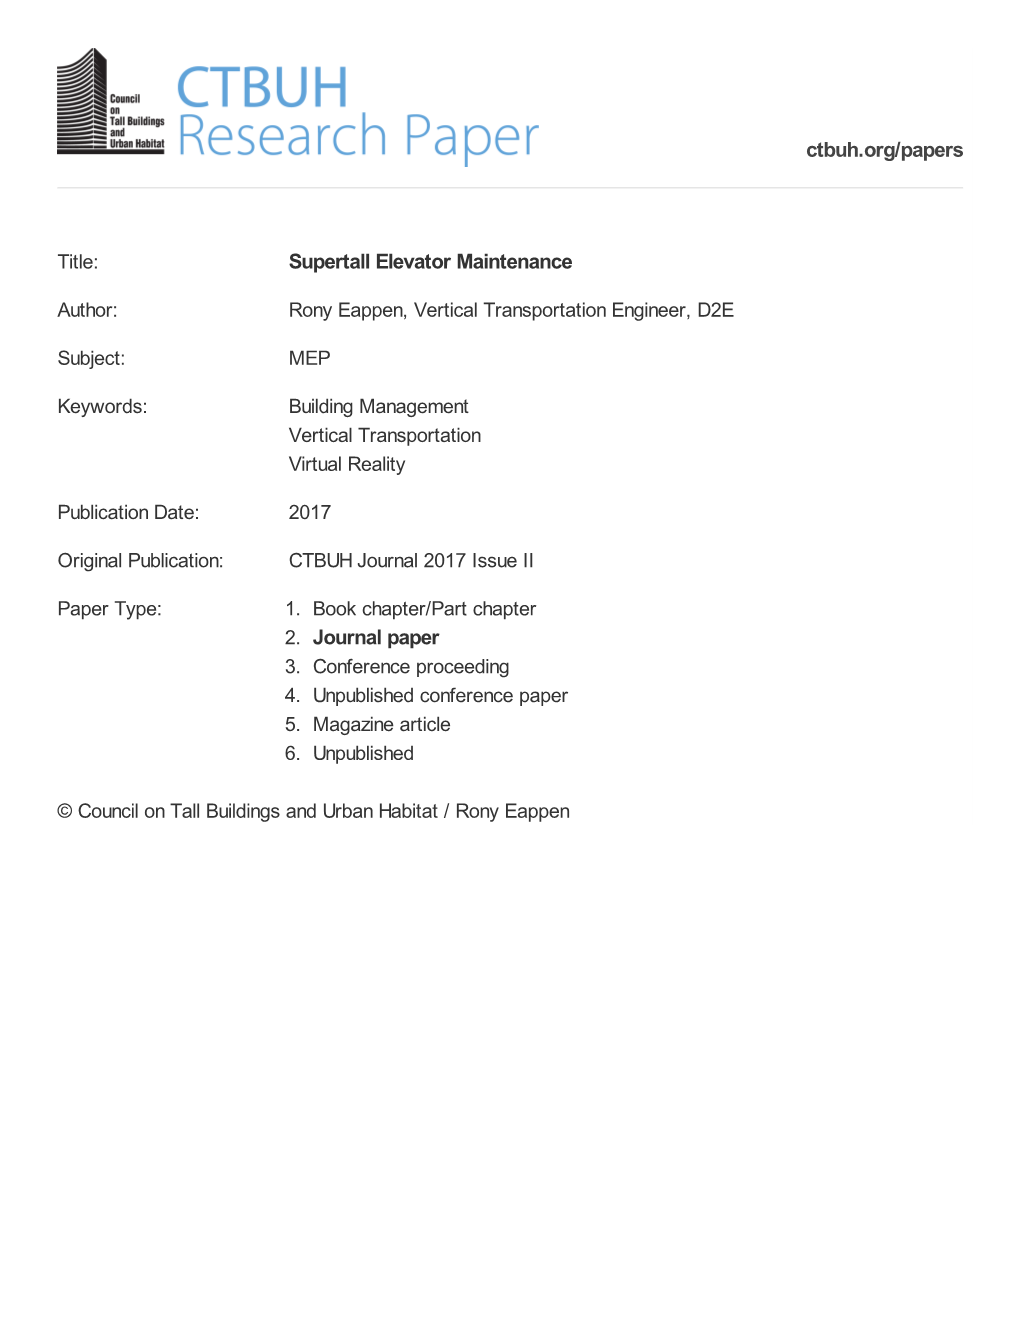 Supertall Elevator Maintenance 2. Journal Paper Ctbuh.Org/Papers